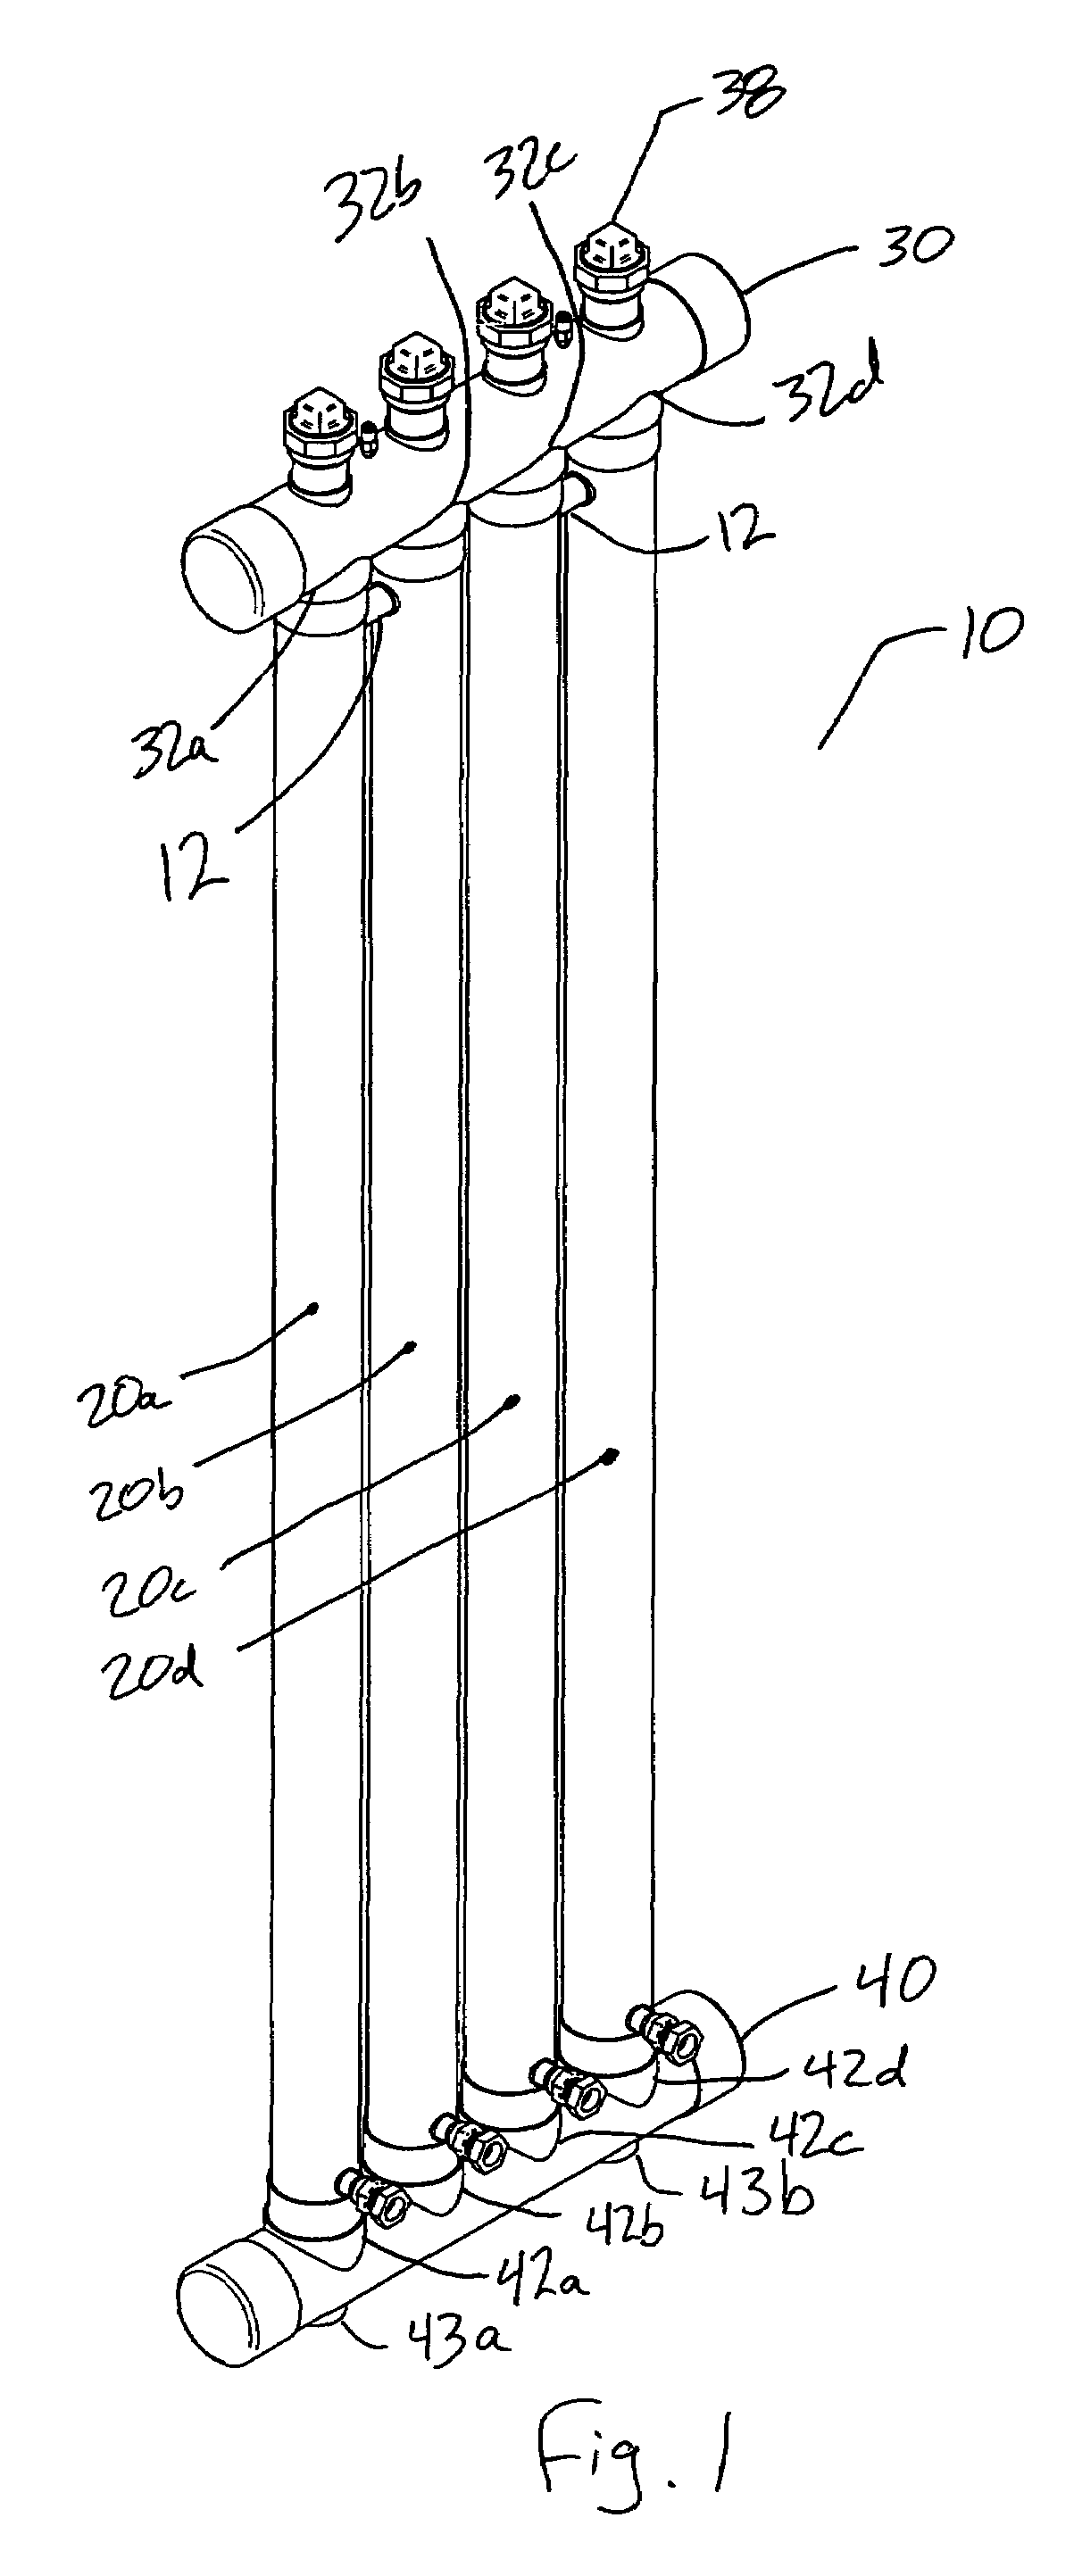 Multi-pass parallel-tube heat exchanger